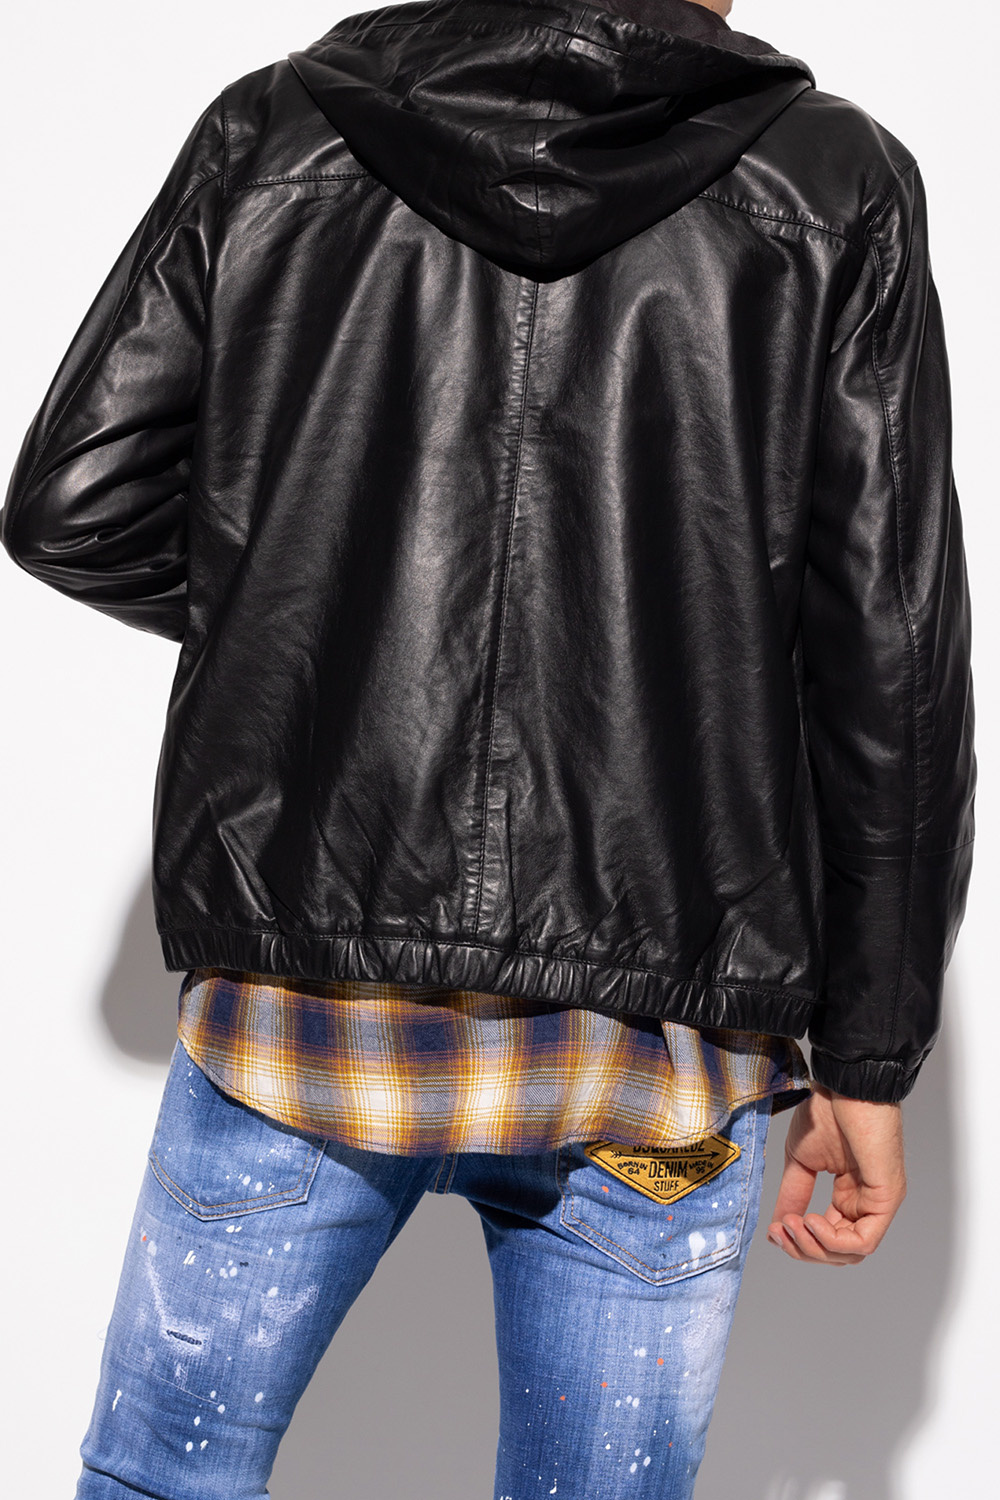 AllSaints ‘Penton’ hooded leather jacket